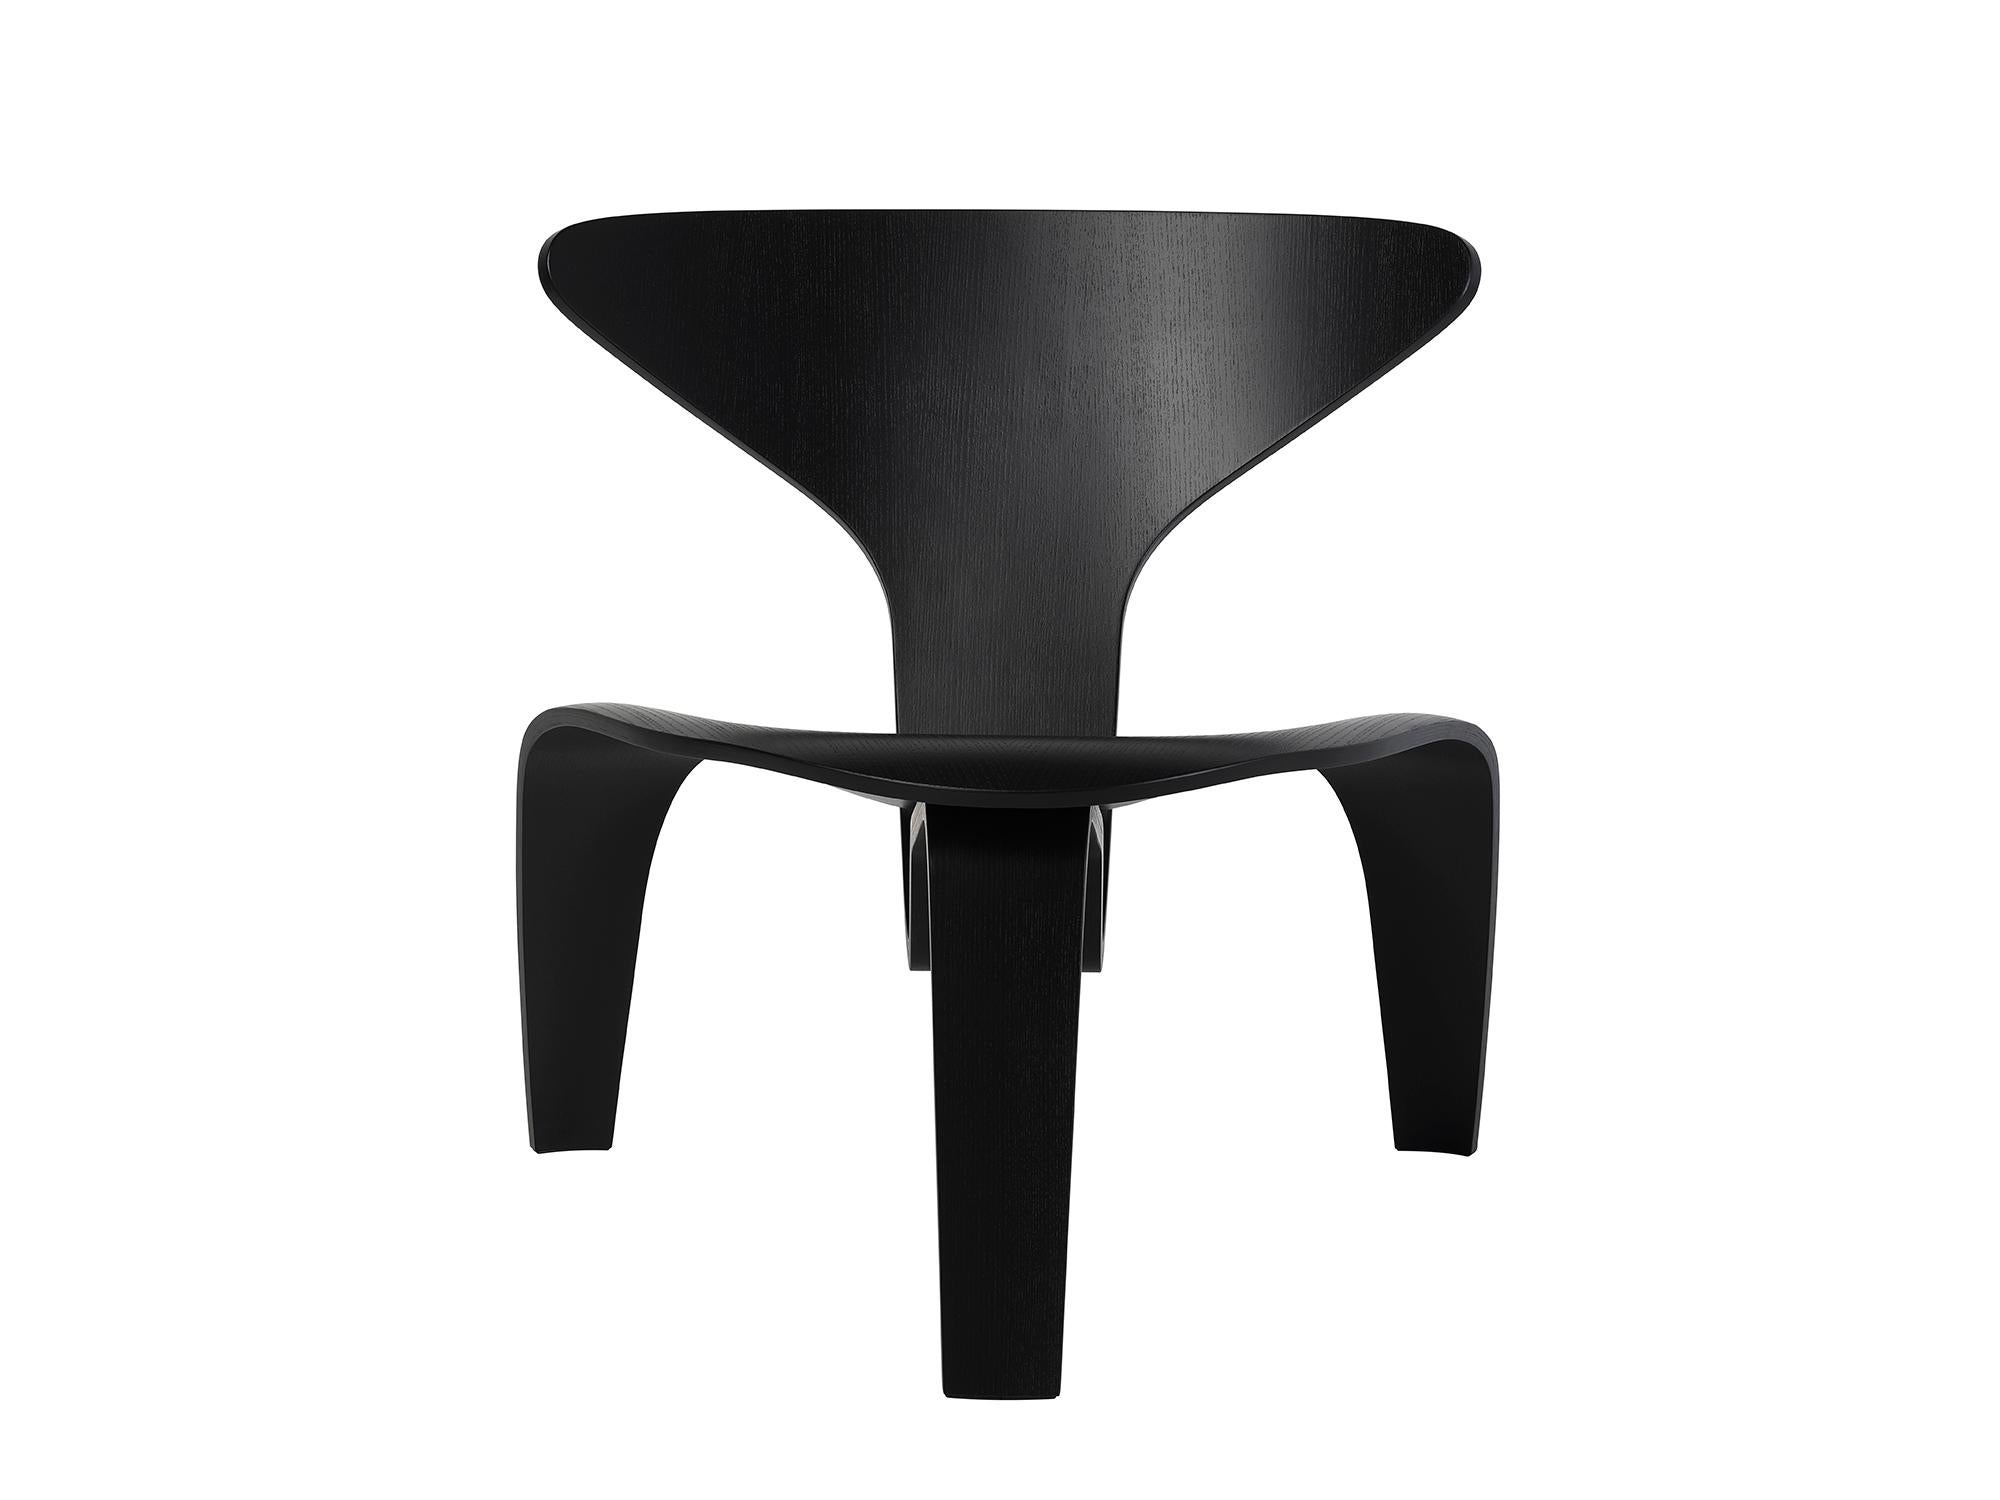 Veneer Poul Kjærholm 'PK0 A' Chair for Fritz Hansen in Black Colored Ash For Sale